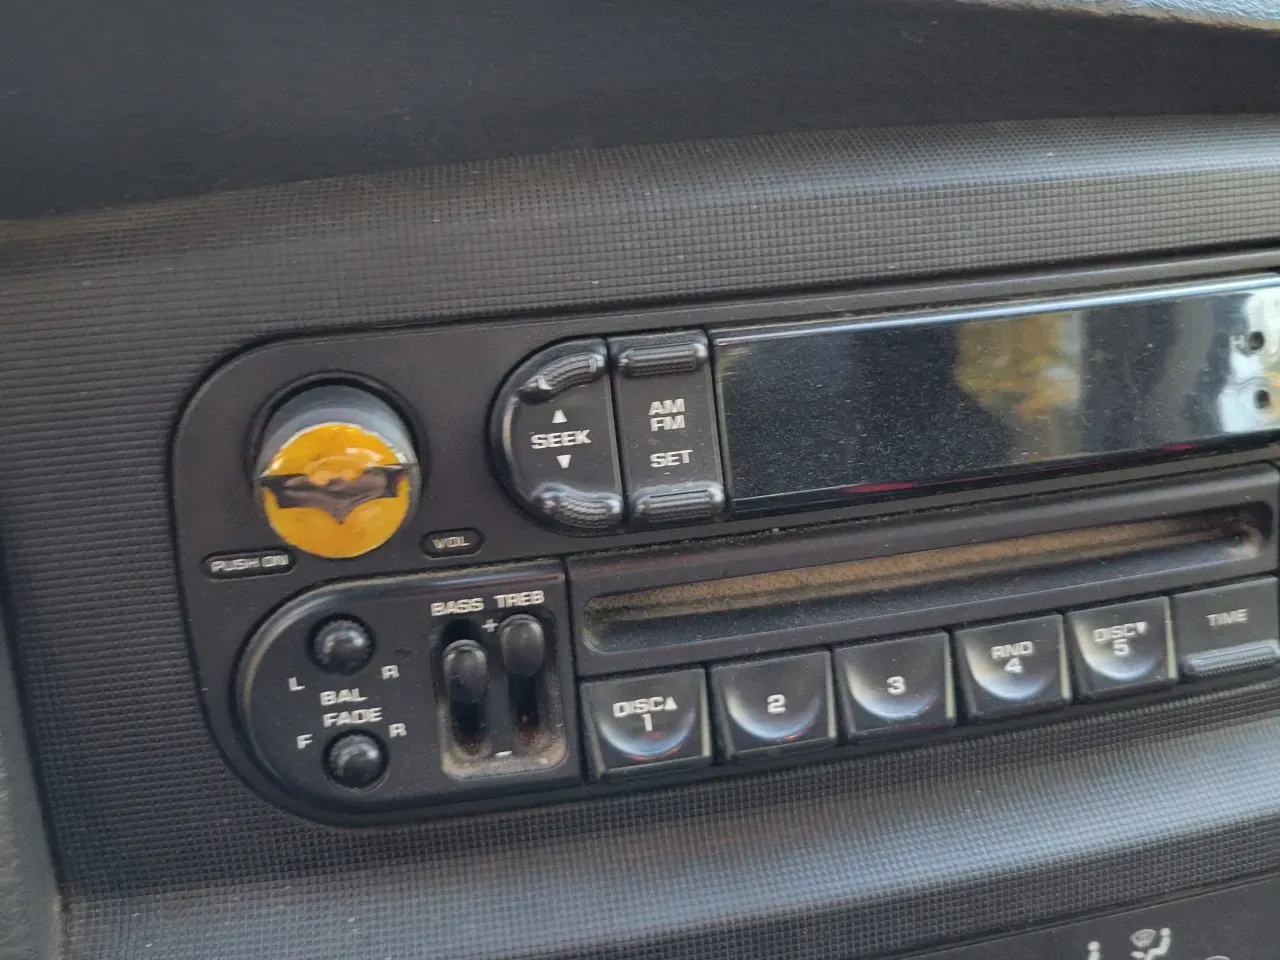 Car Radio knob